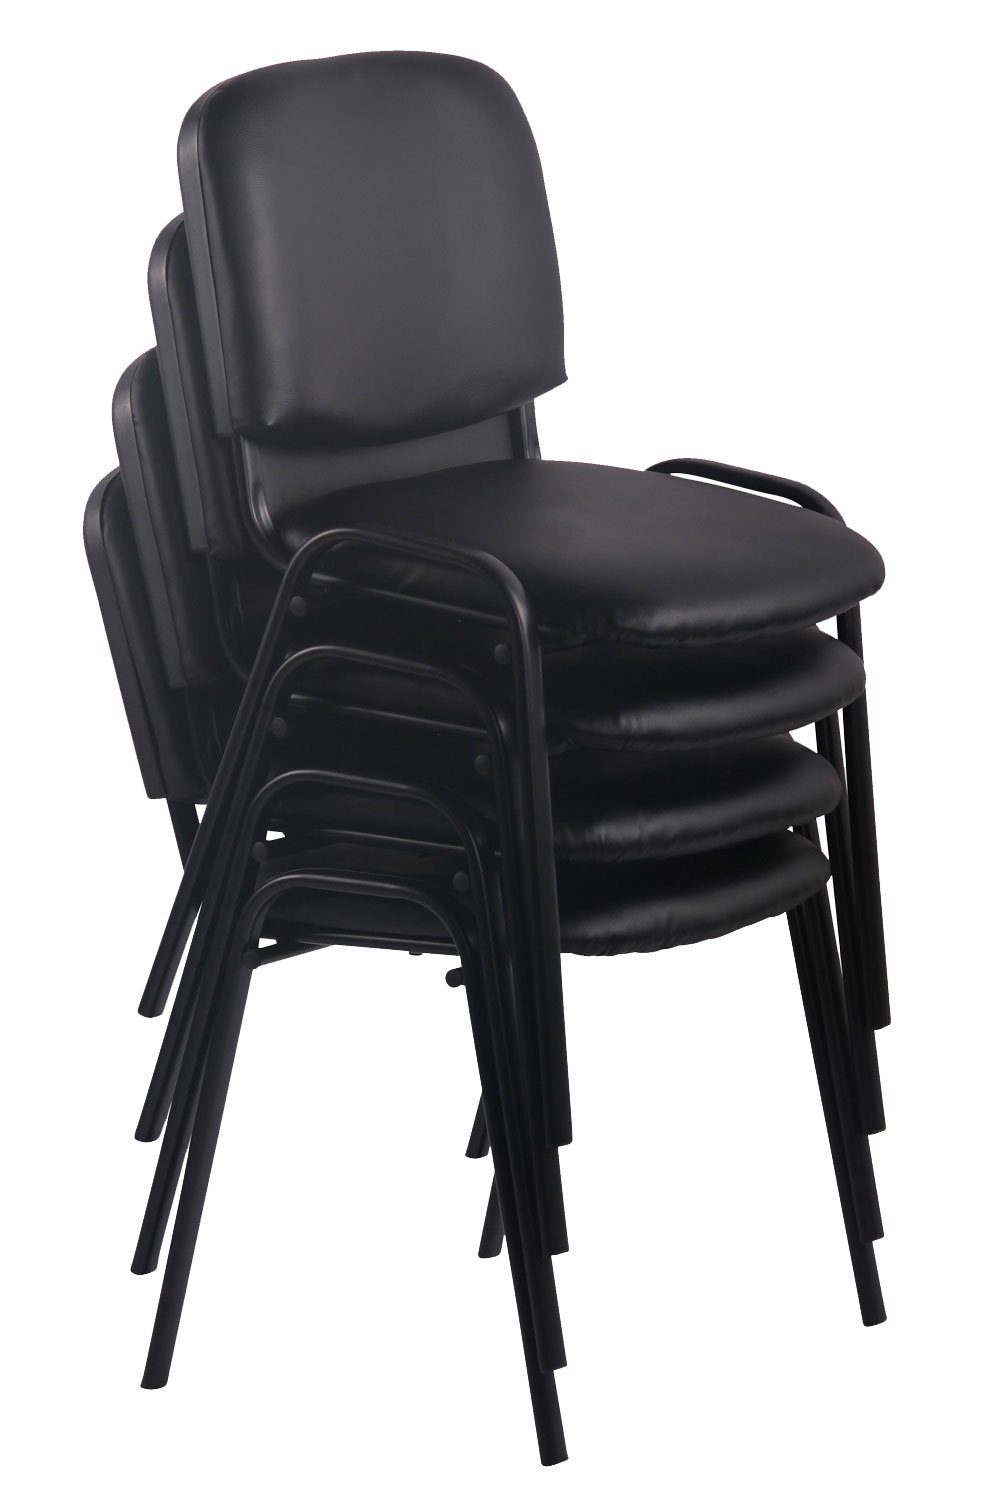 Besucherstuhl Gestell: Warteraumstuhl Messestuhl, 4 Polsterung schwarz TPFLiving - - Keen matt grün mit (Besprechungsstuhl Kunstleder - St), Metall - Sitzfläche: Konferenzstuhl hochwertiger